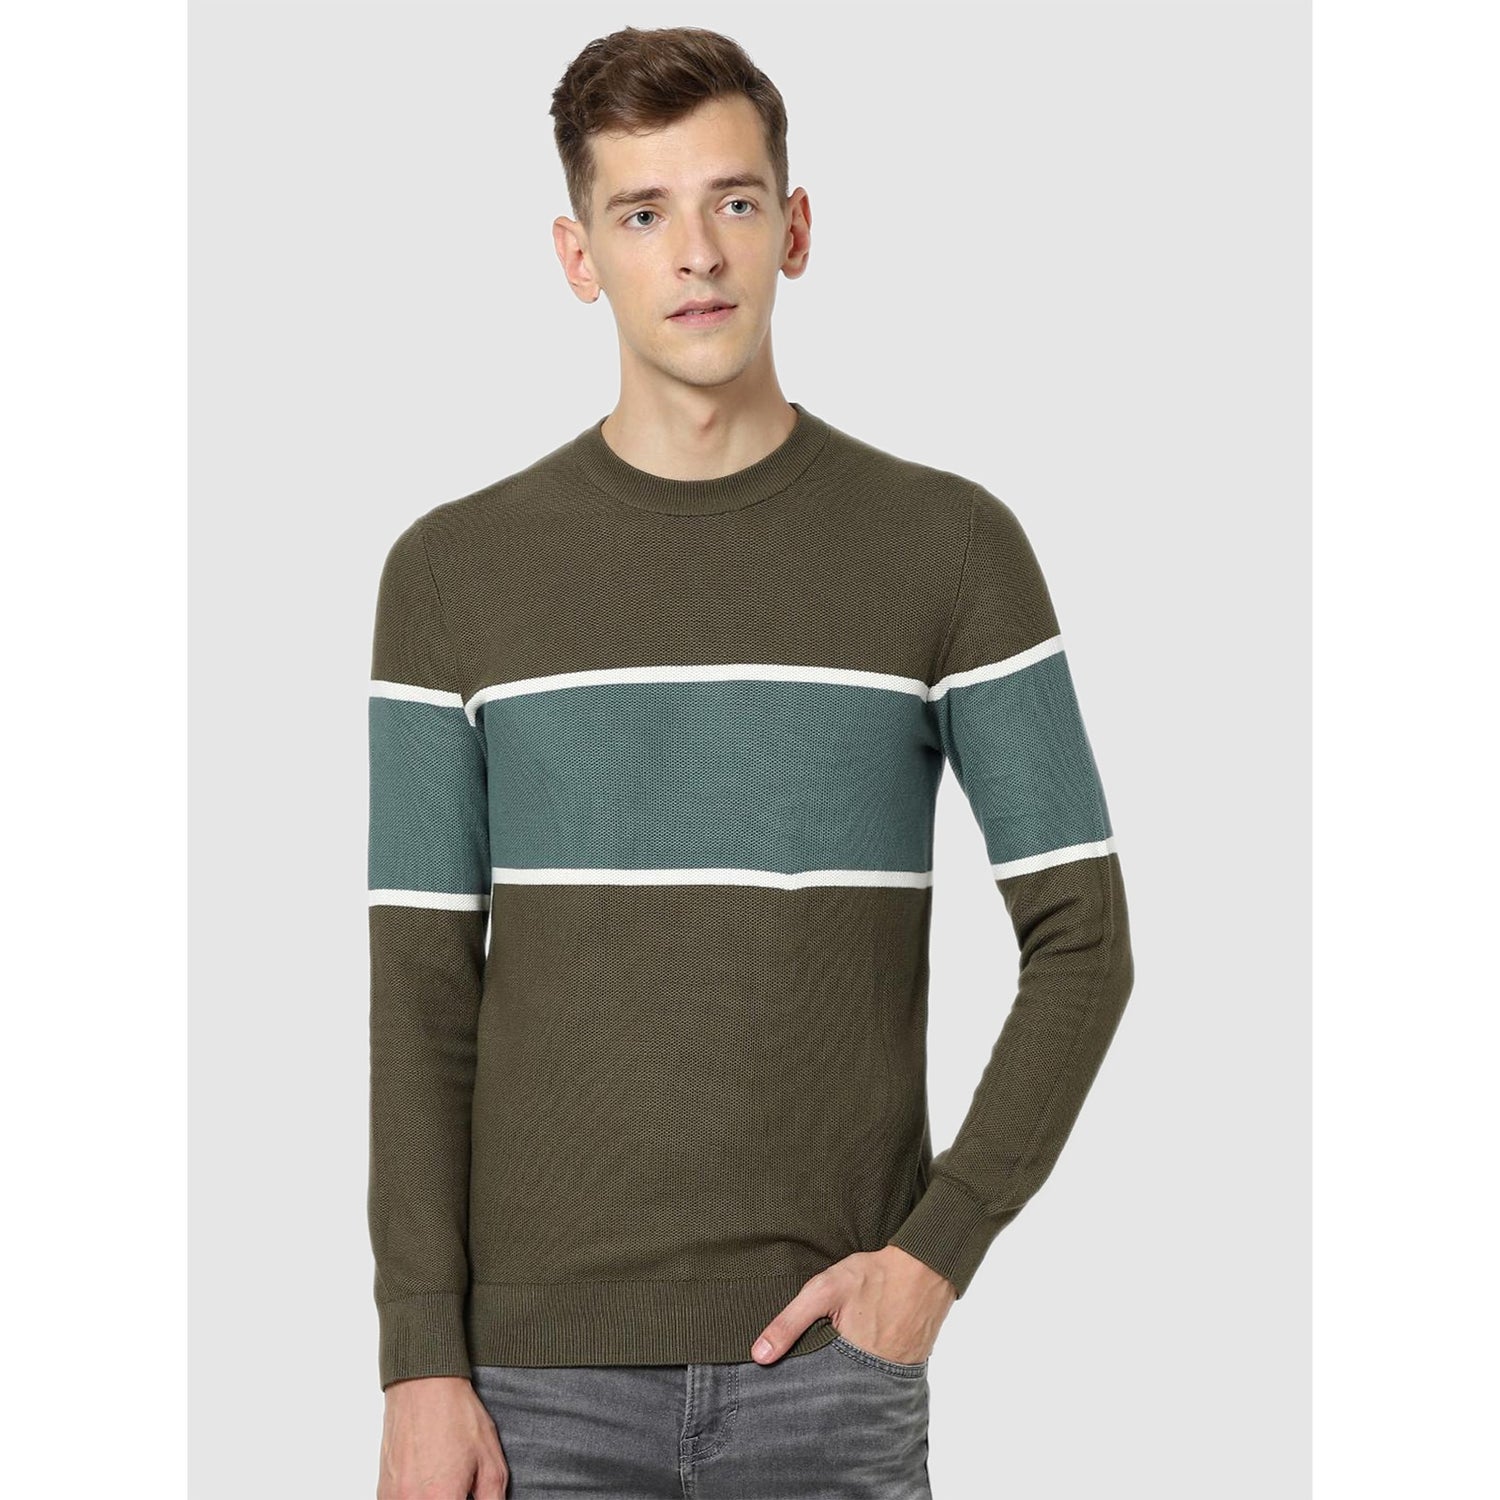 Olive Green and Blue Colourblocked Pullover Sweater (CEBLOCPIK)